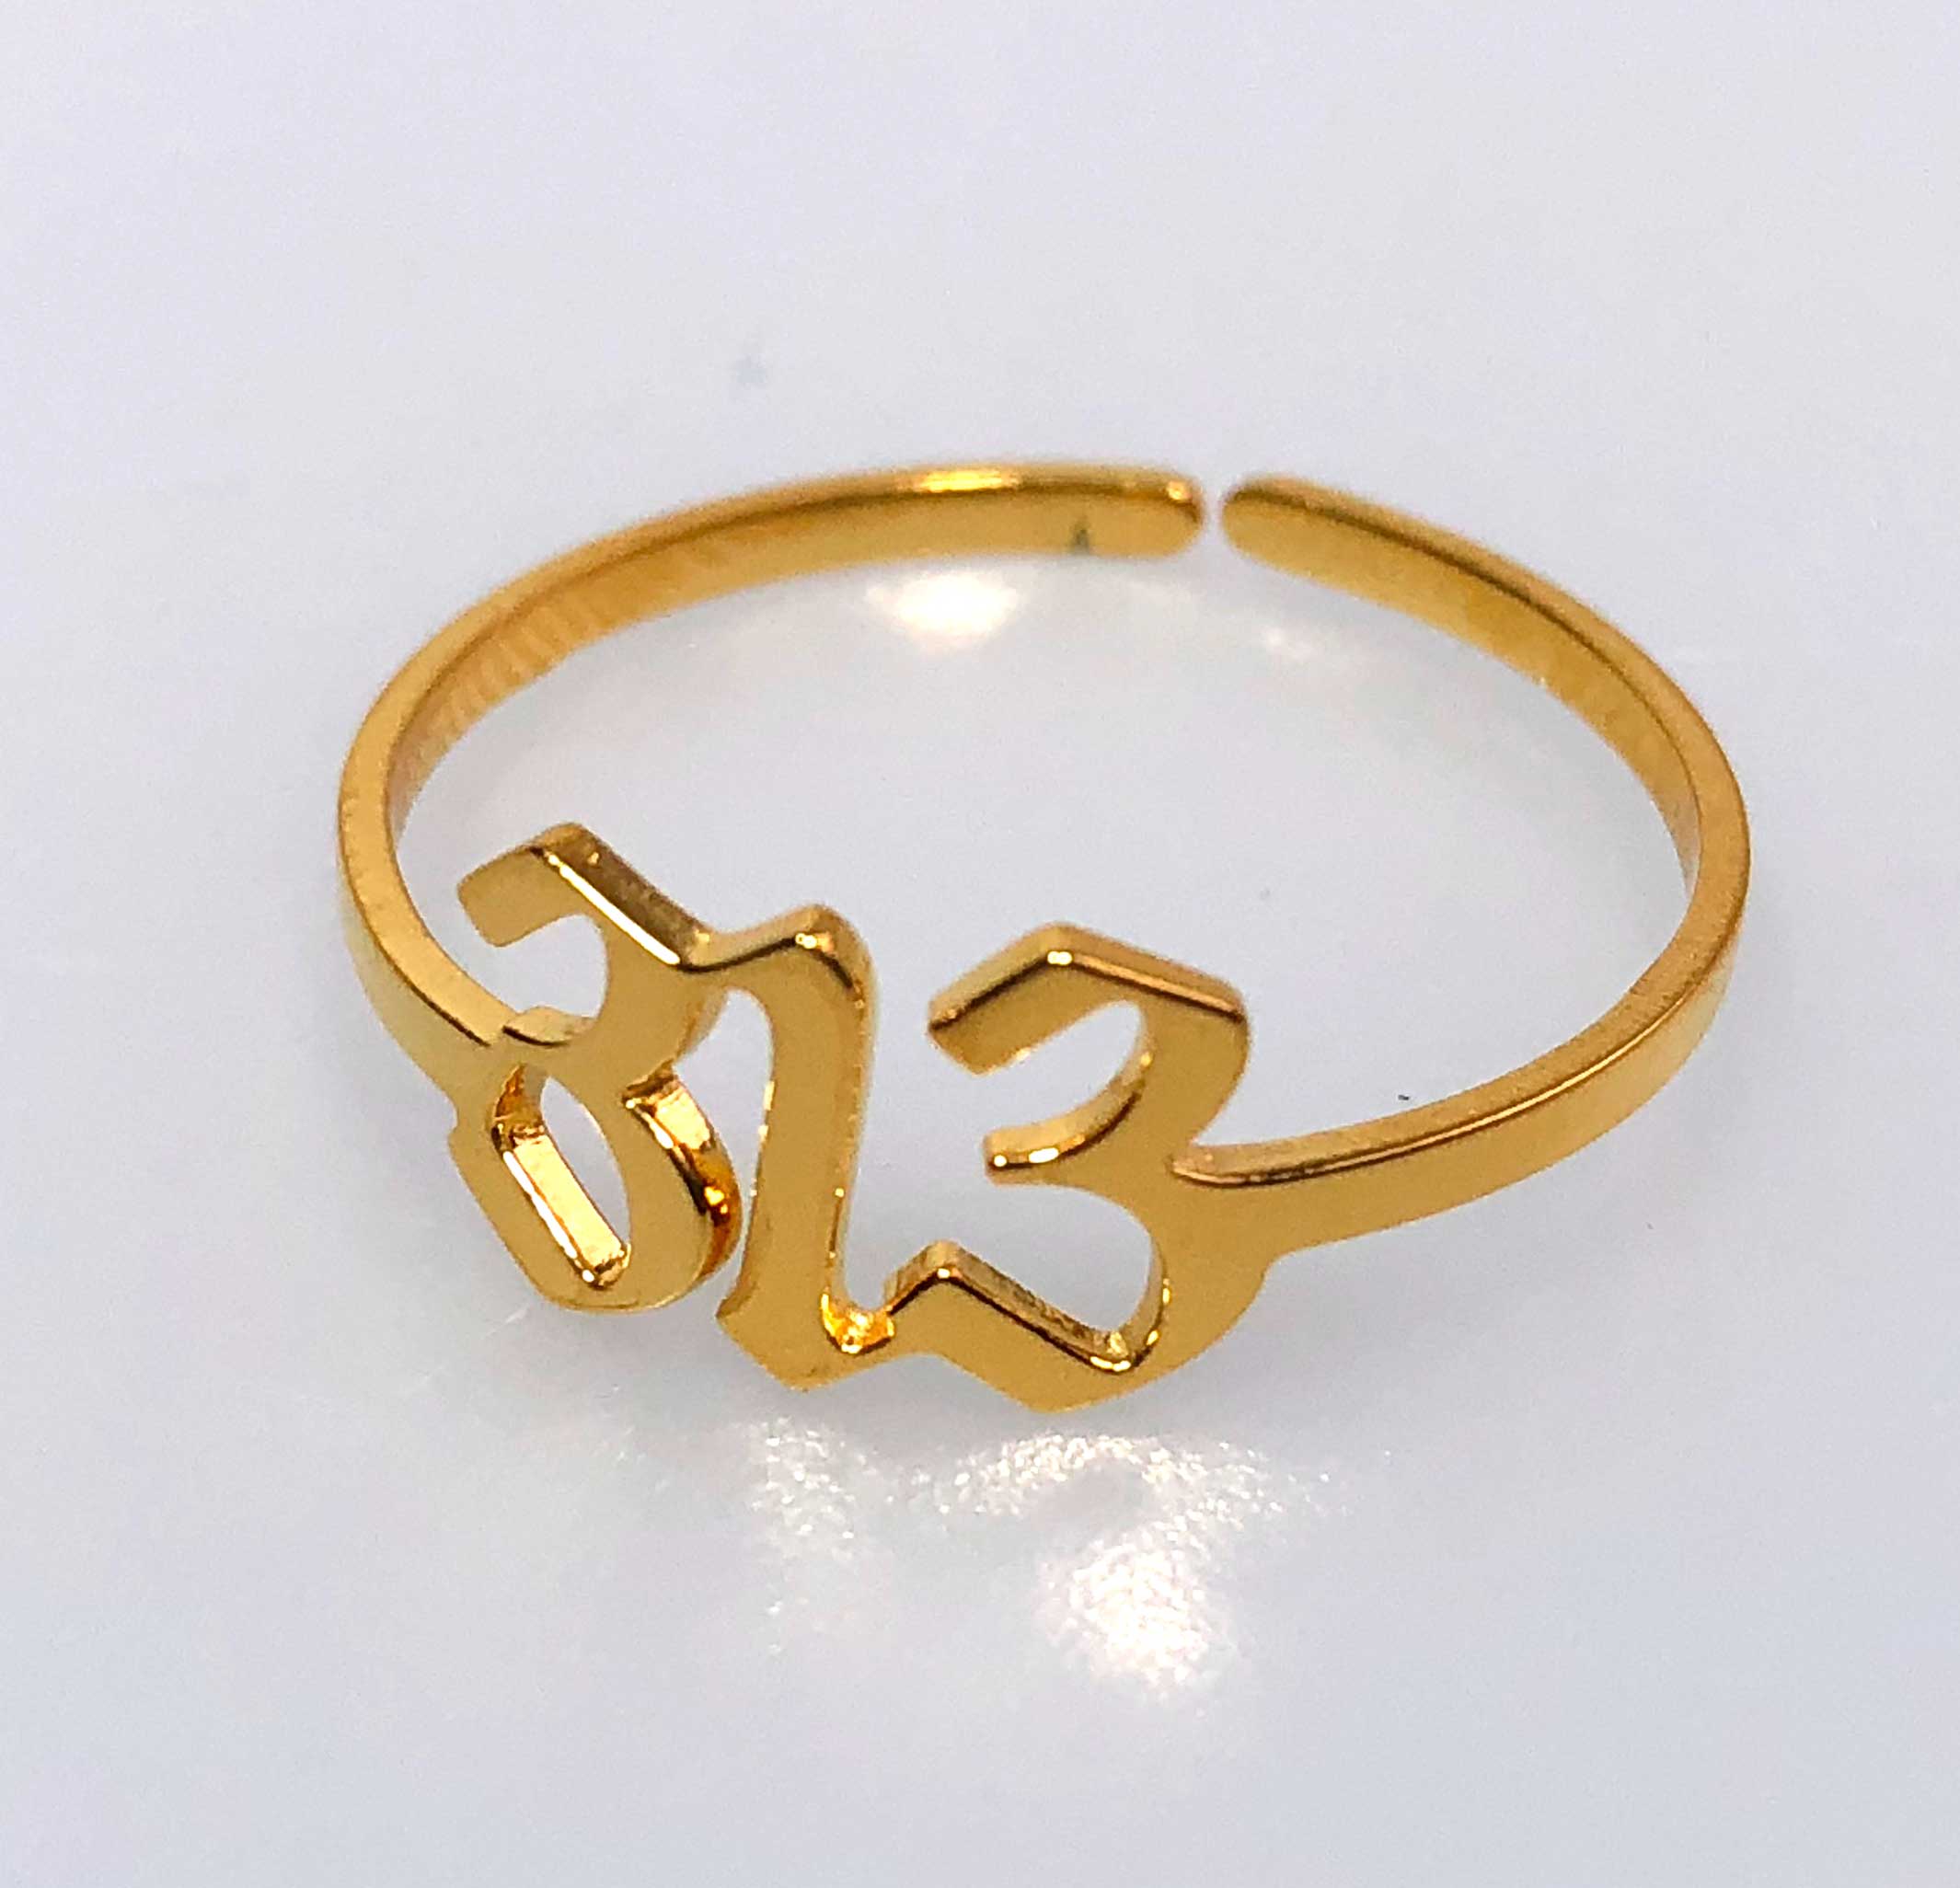 Resizable Ring to Bracelet/ Bangle Sterling Silver Bracelet Rose Gold  Plated Ring to Bracelet Size Adjustable Ring adjustable Bracelet - Etsy